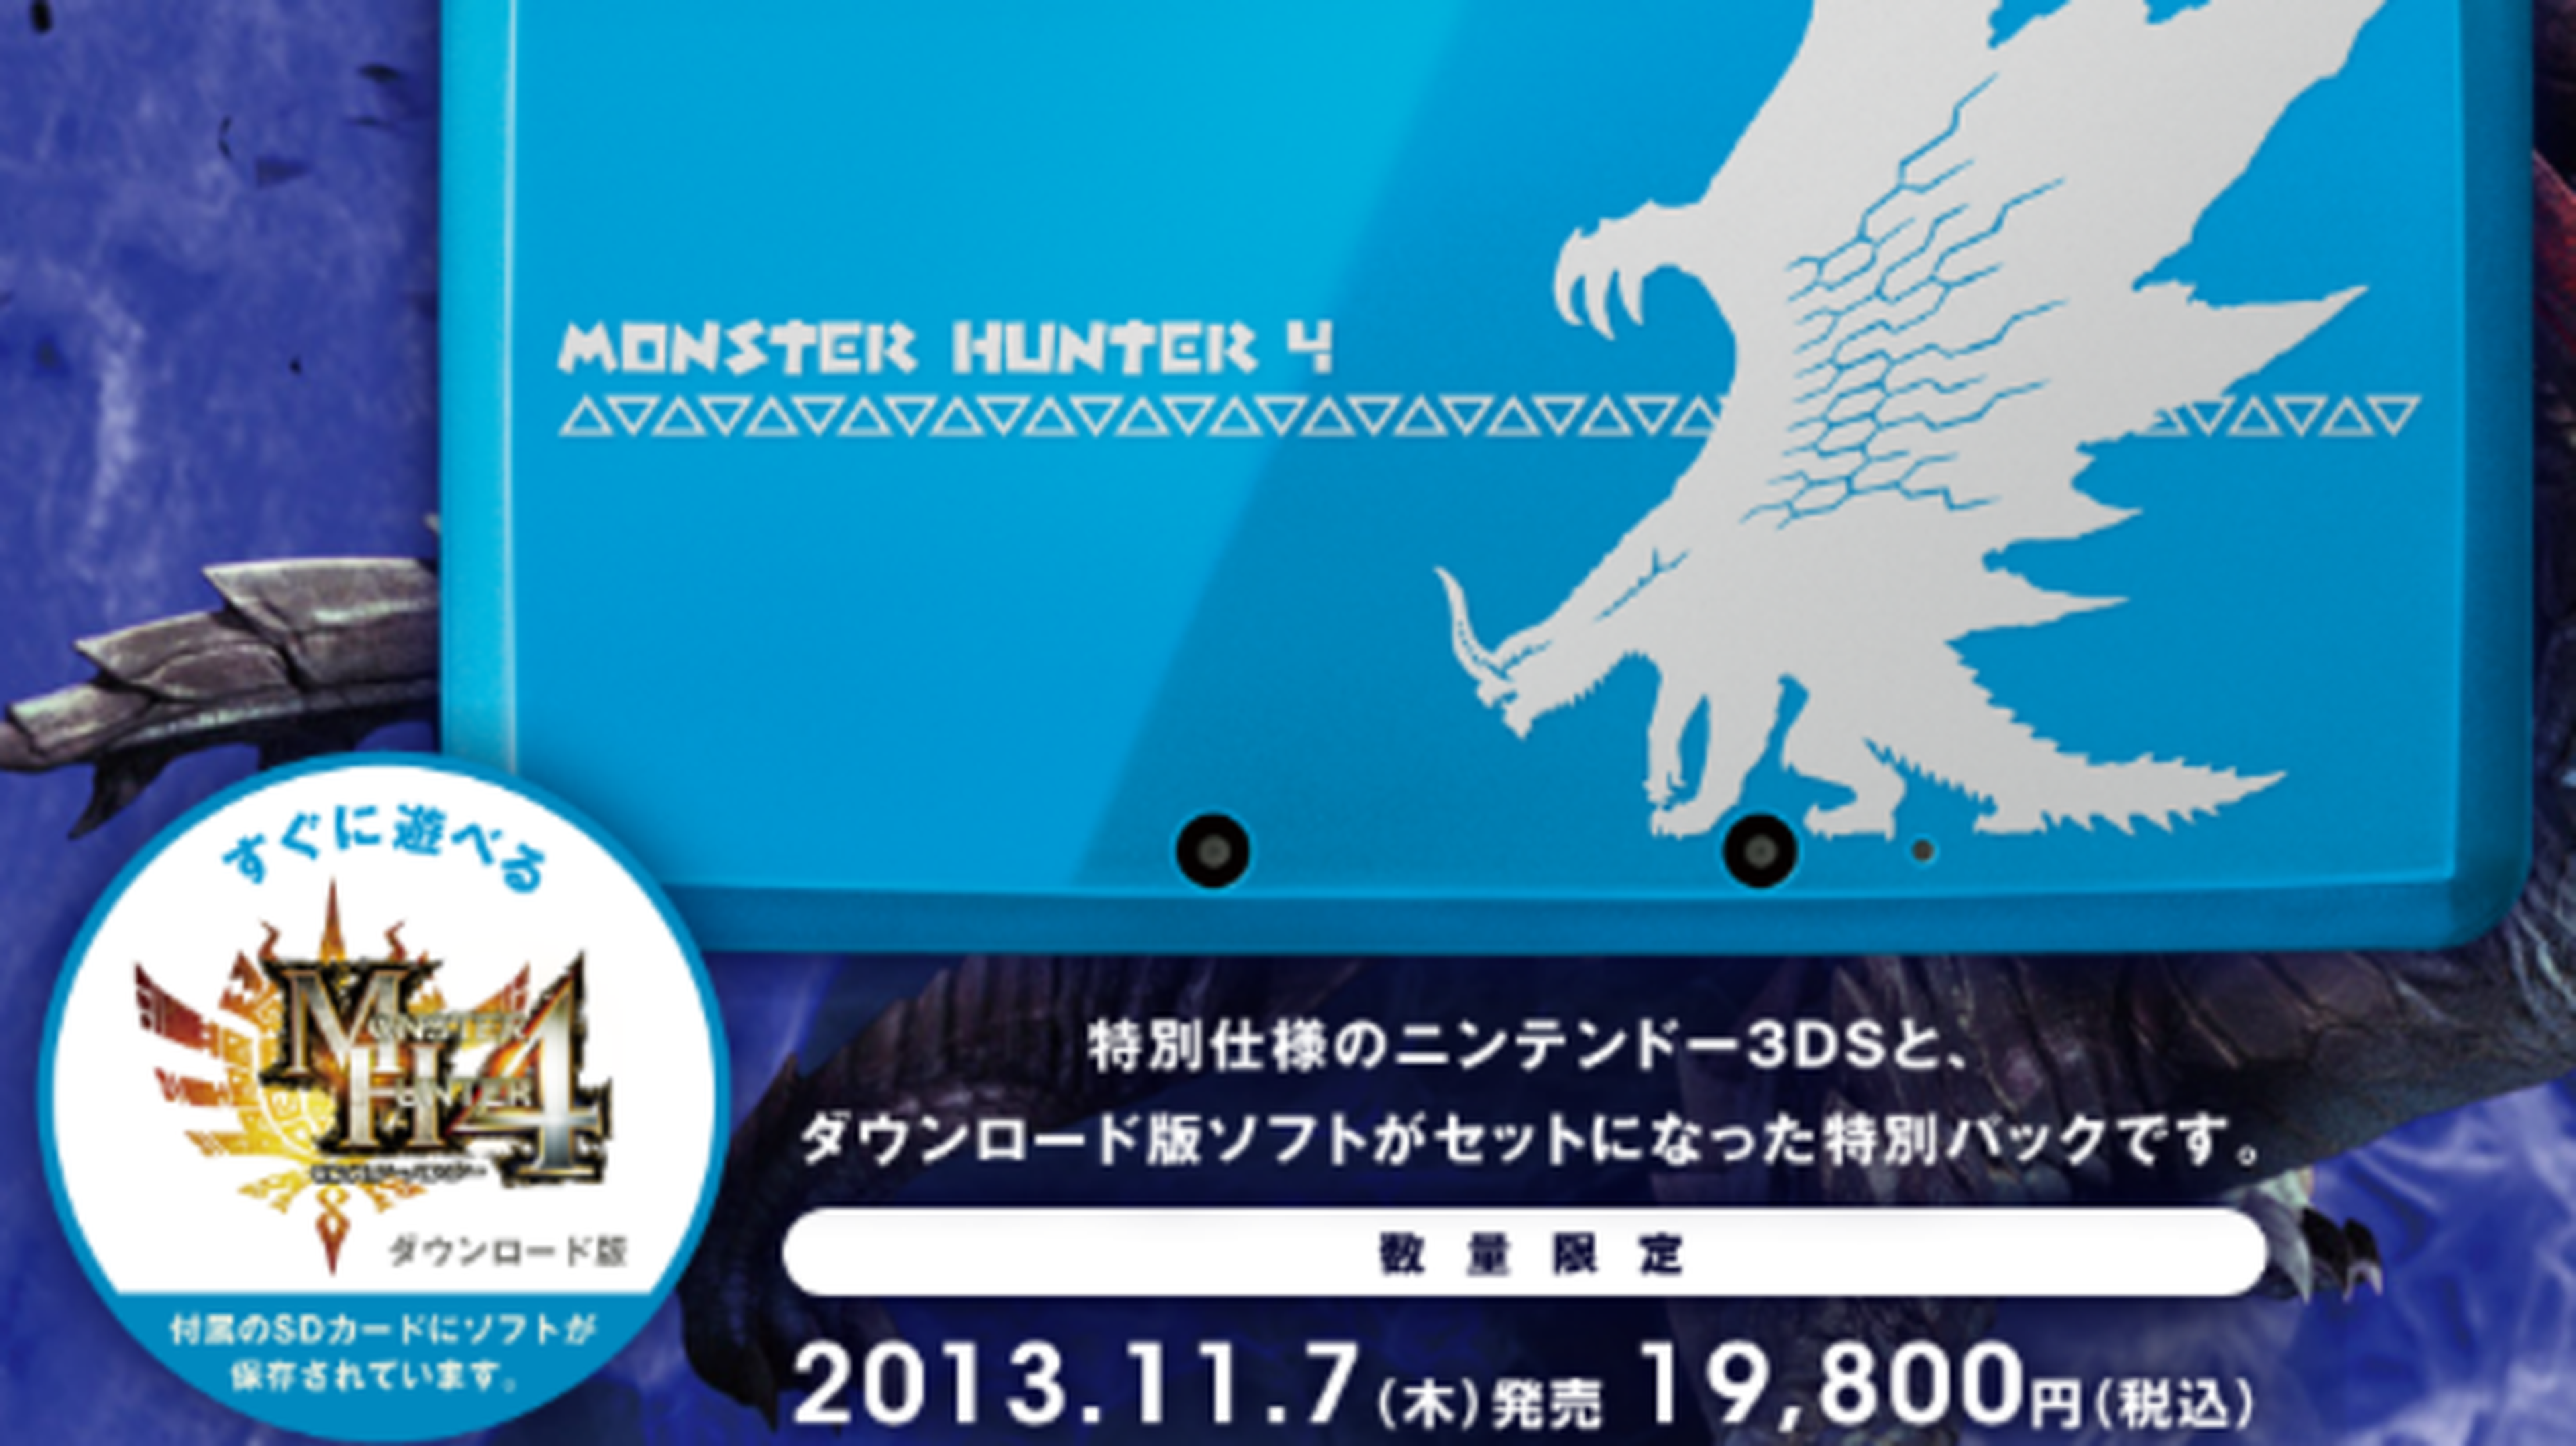 Monster Hunter 4 tendrá su propia 3DS